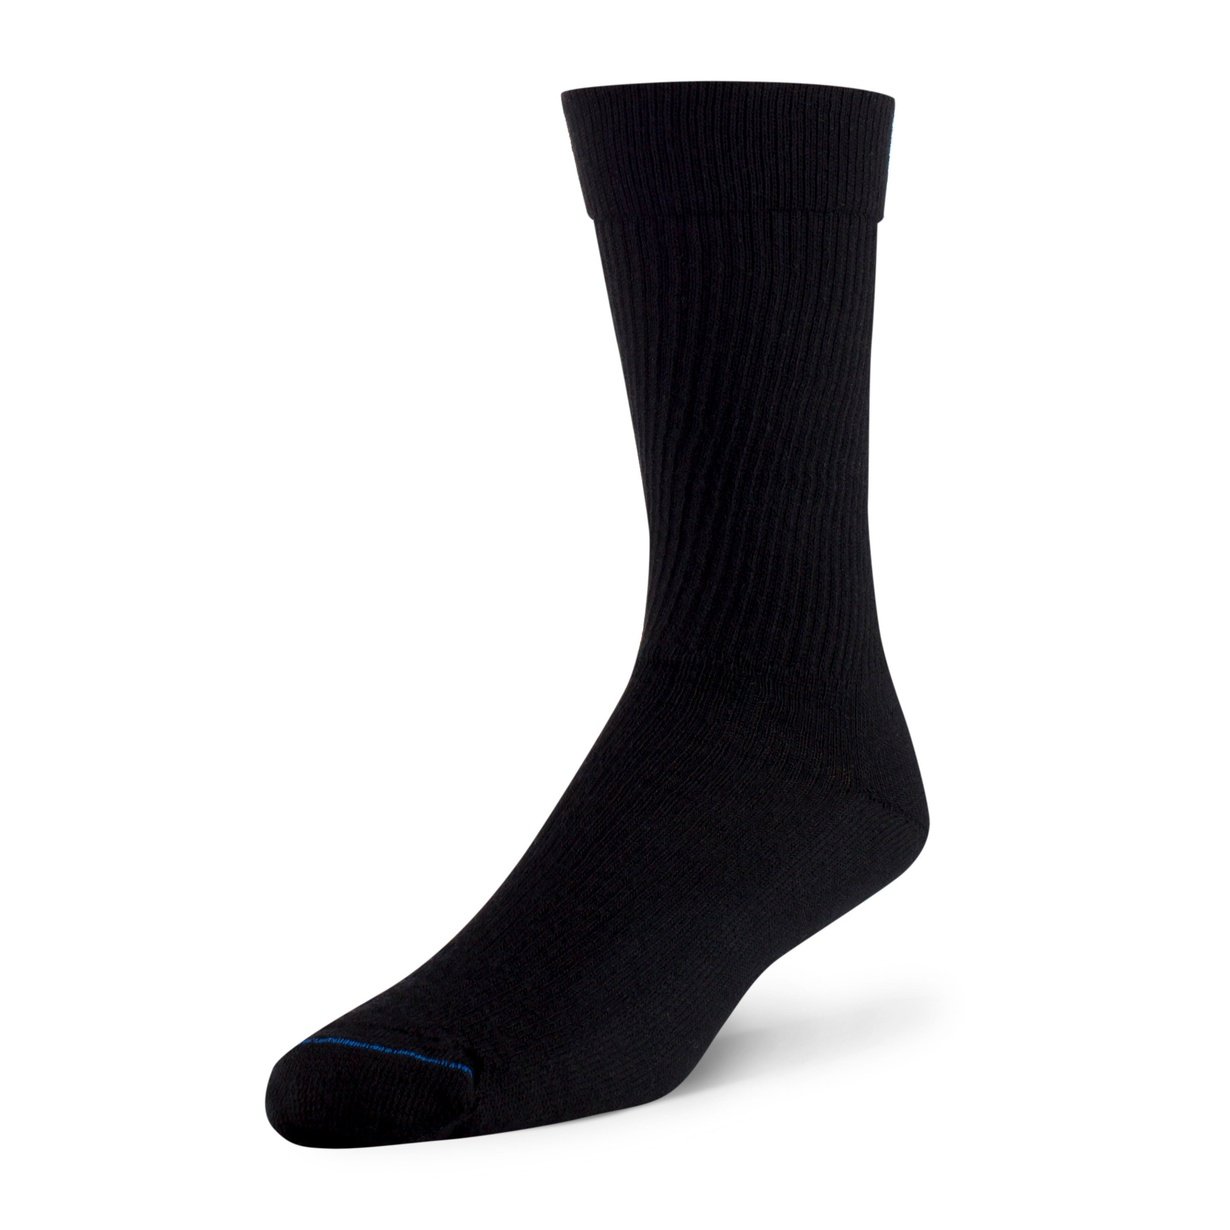 Duray - Police Merino unisex socks